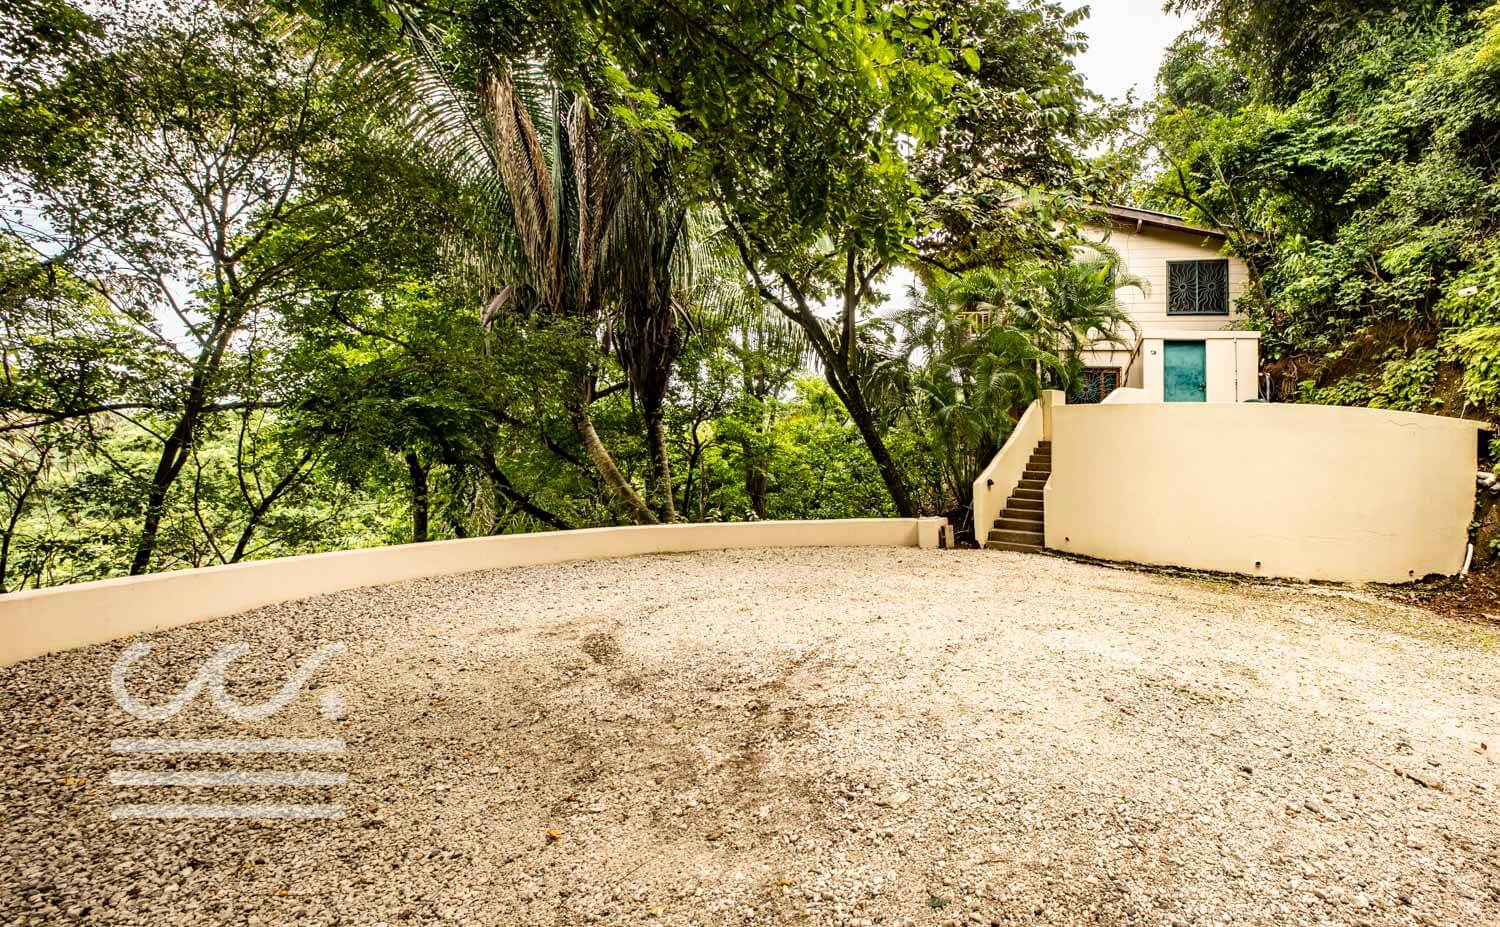 Casa-Ladera-Wanderlust-Realty-Real-Estate-Retals-Nosara-Costa-Rica-14.jpg